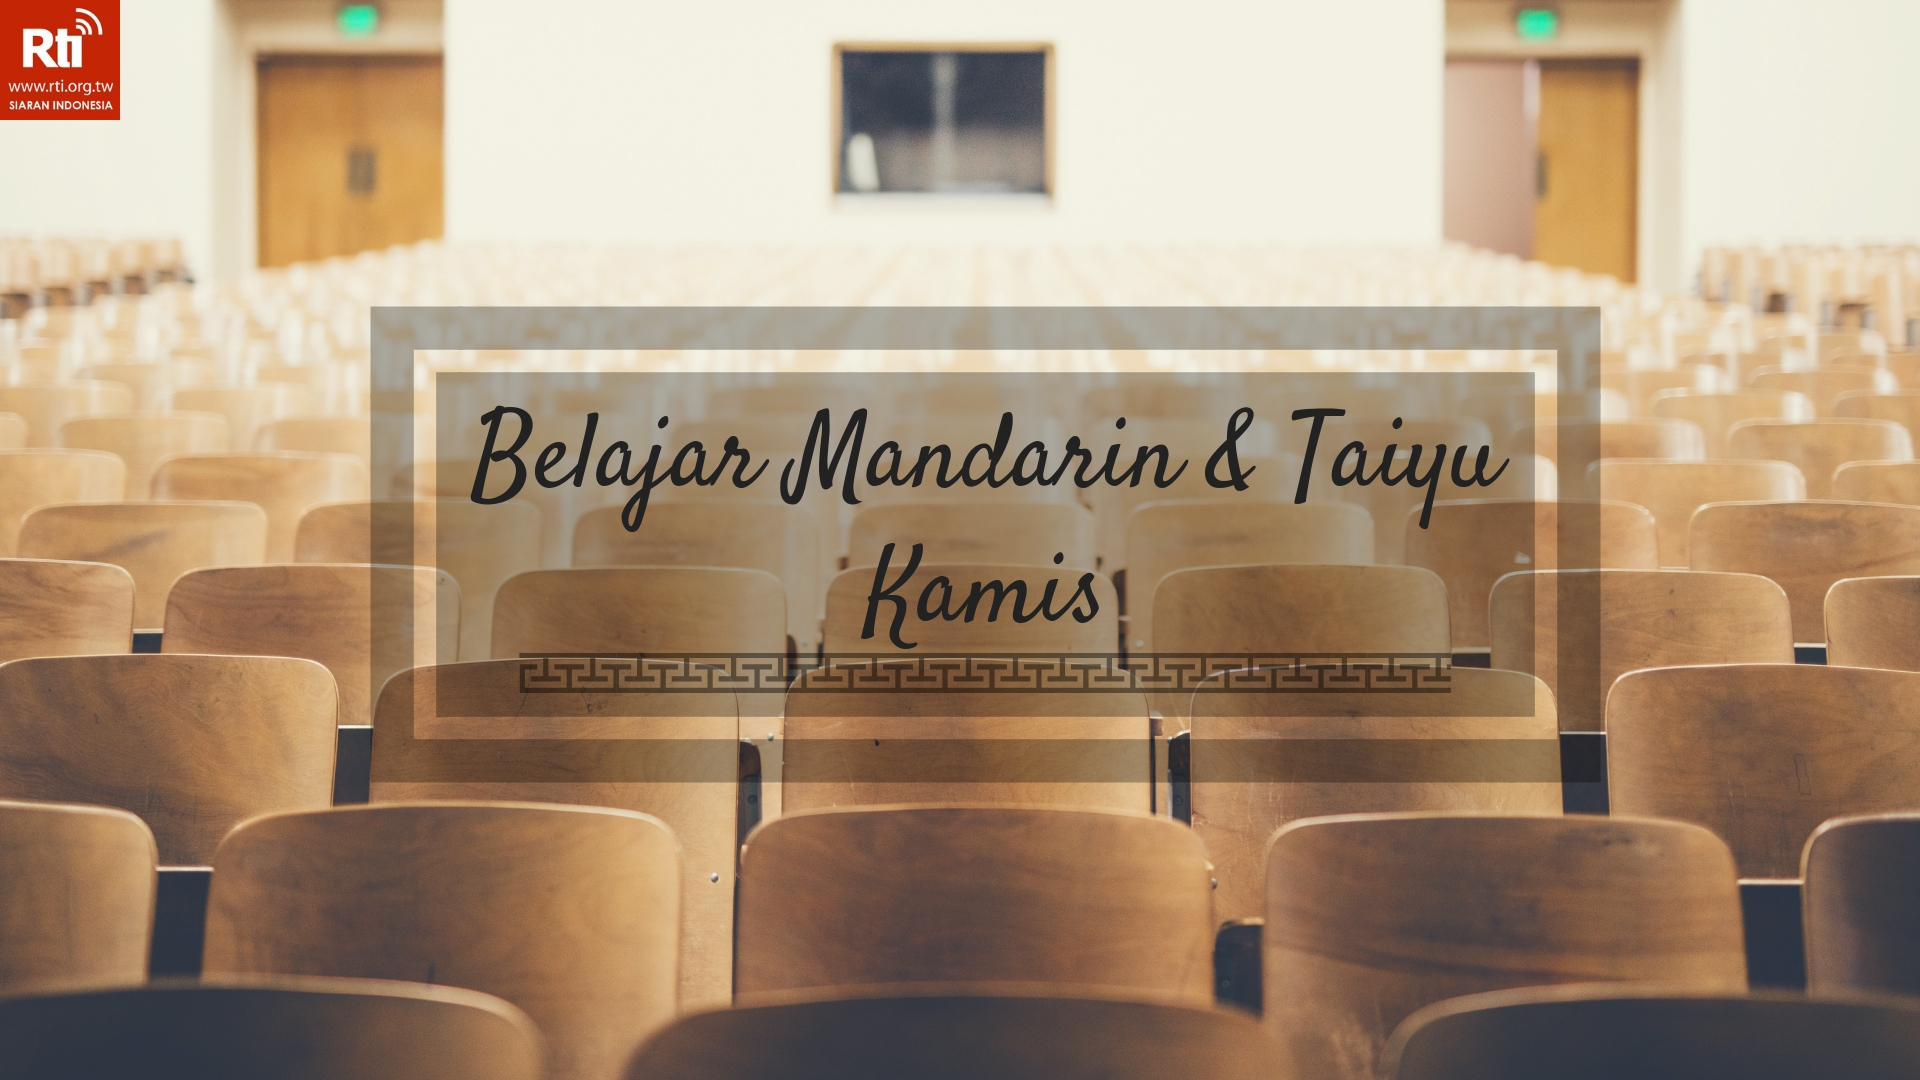 Belajar Mandarin taiyu dan Bahasa Indonesia